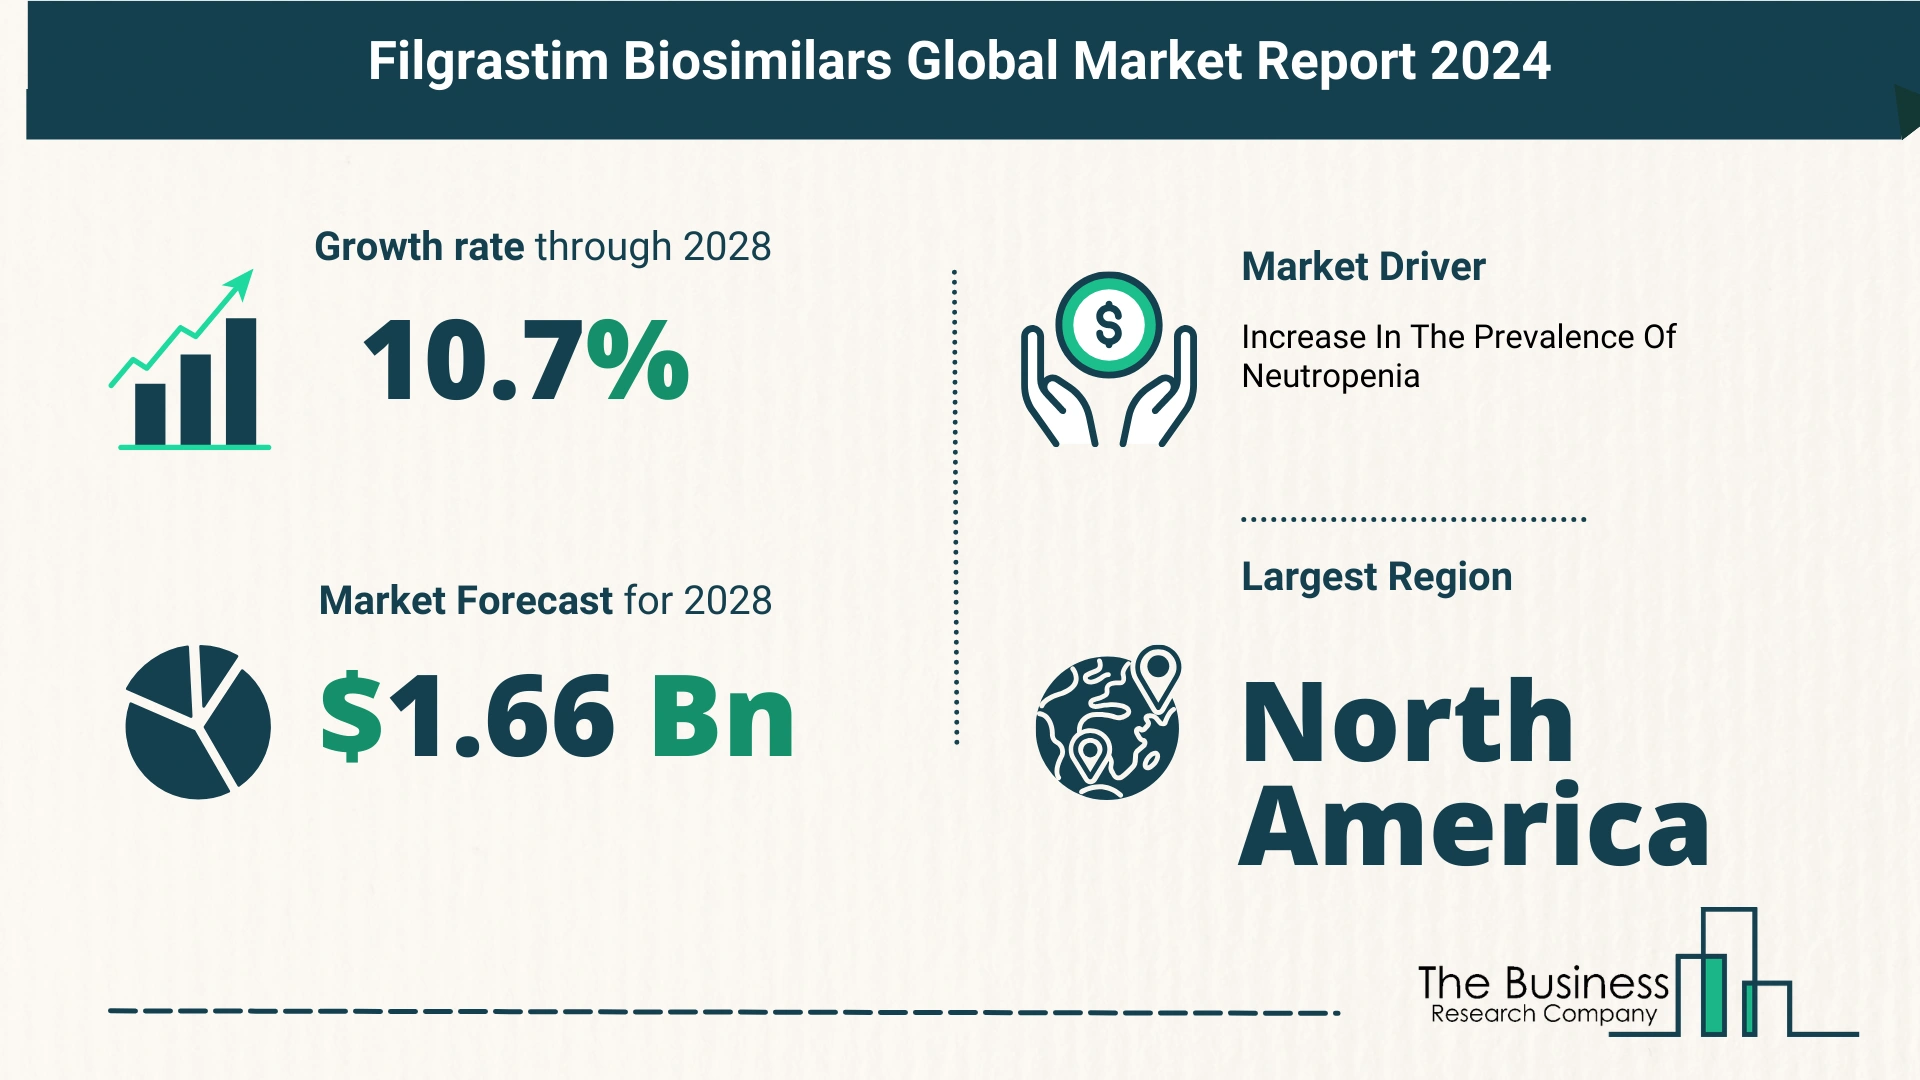 Global Filgrastim Biosimilars Market Size